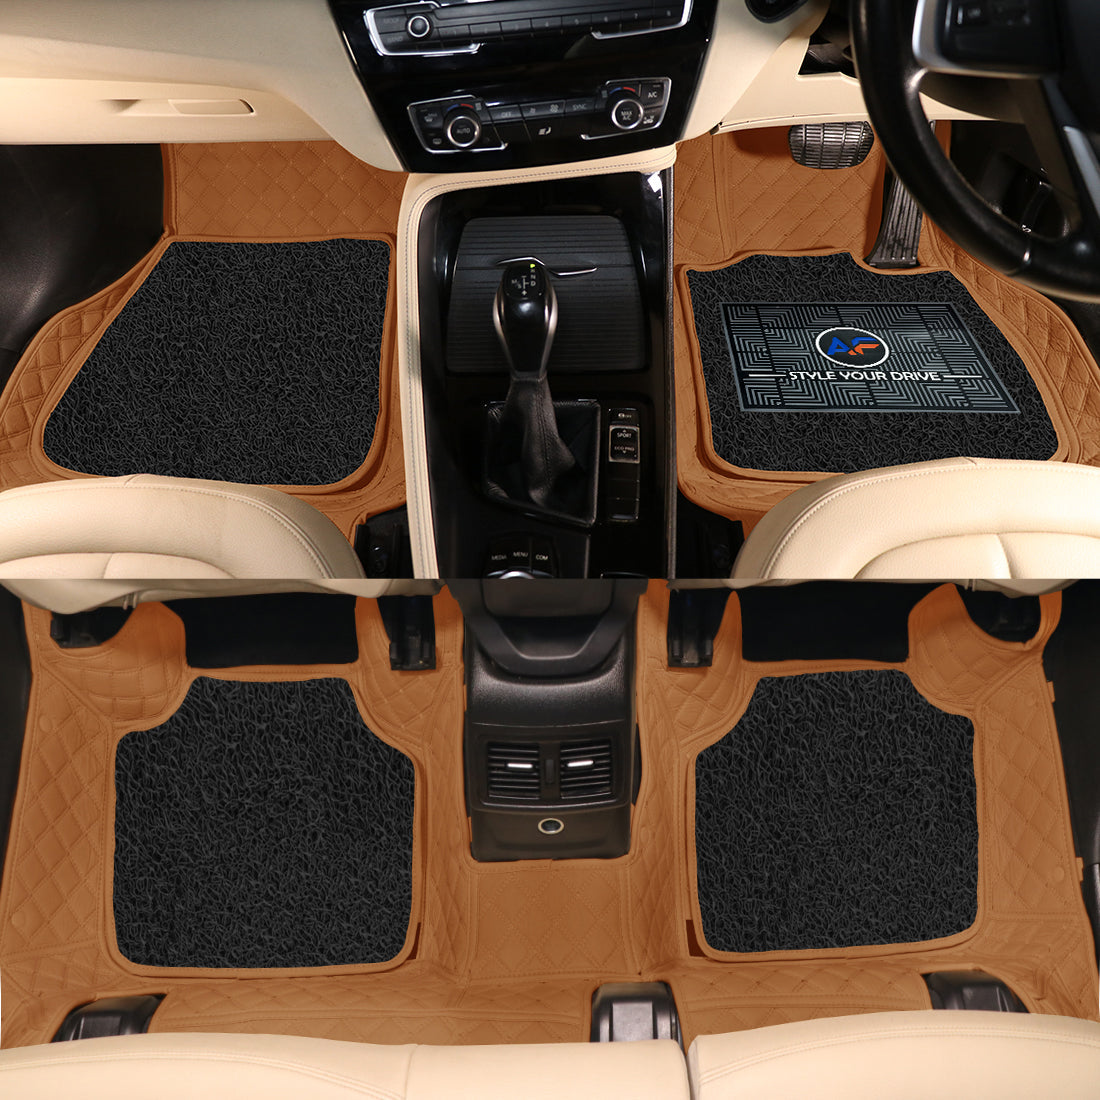 Toyota Land Cruiser Prado 2016 7D Luxury Car Mat, All Weather Proof, Anti-Skid, 100% Waterproof & Odorless with Unique Diamond Fish Design (24mm Luxury PU Leather, 2 Rows)